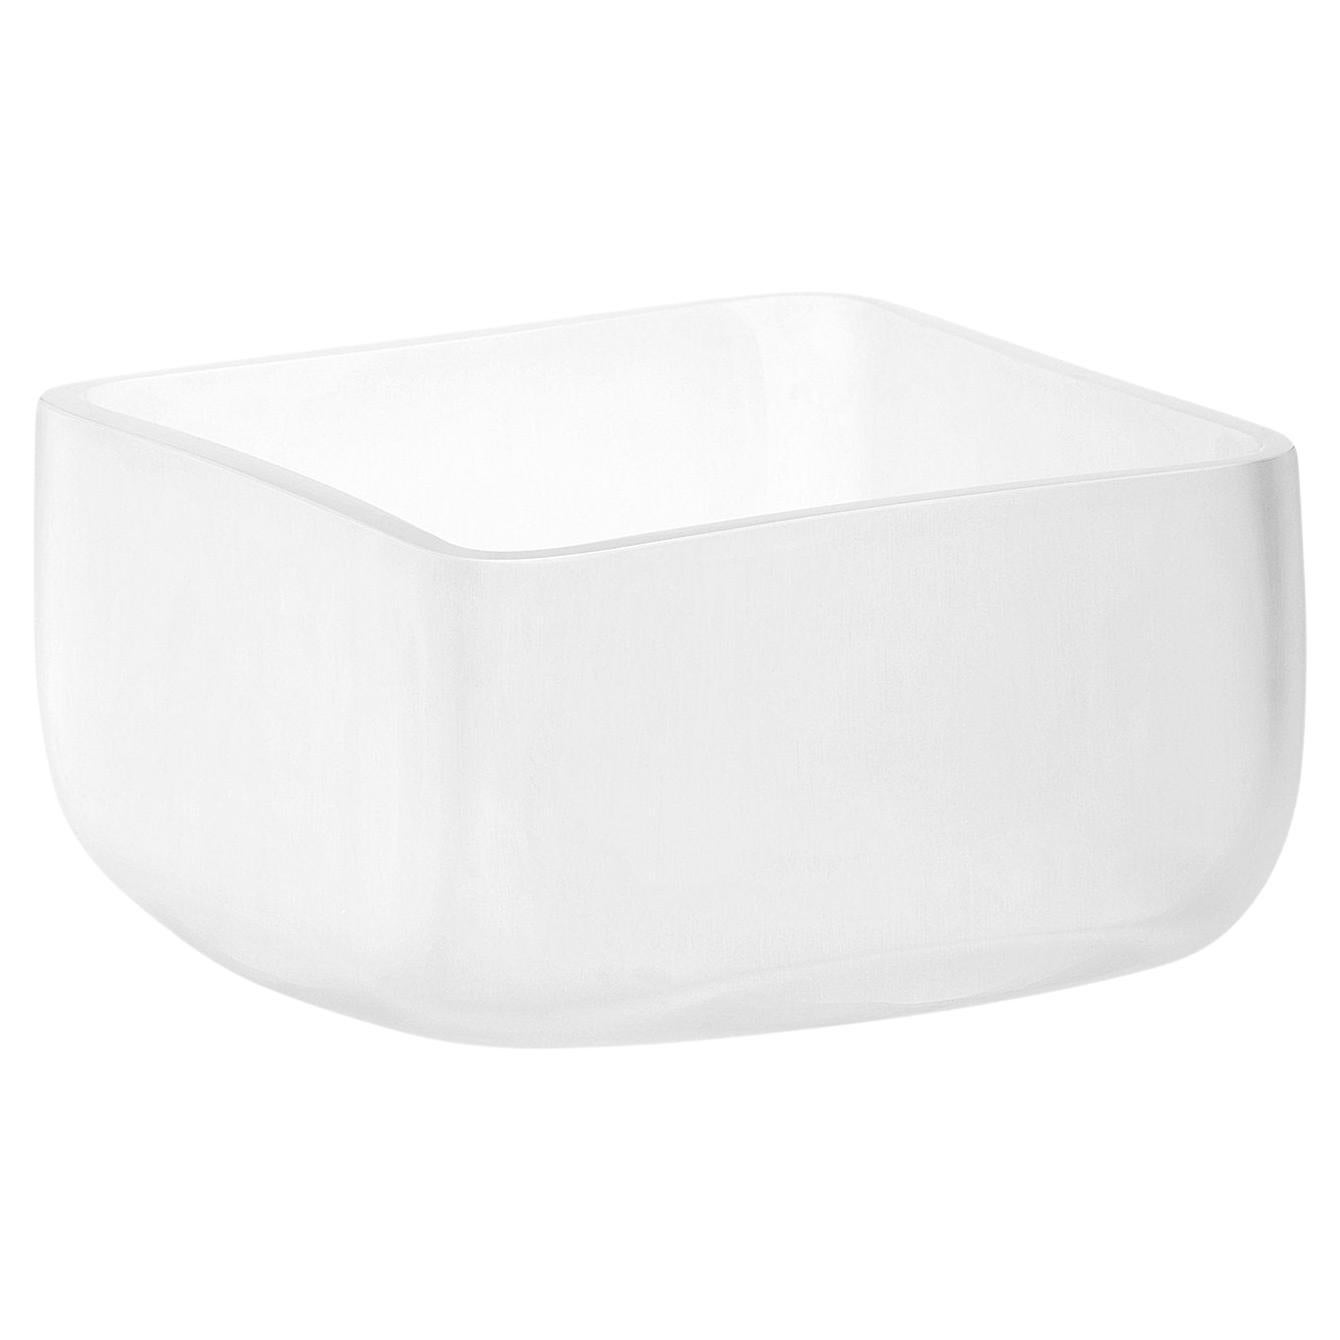 Cubes White Bowl by LPKW